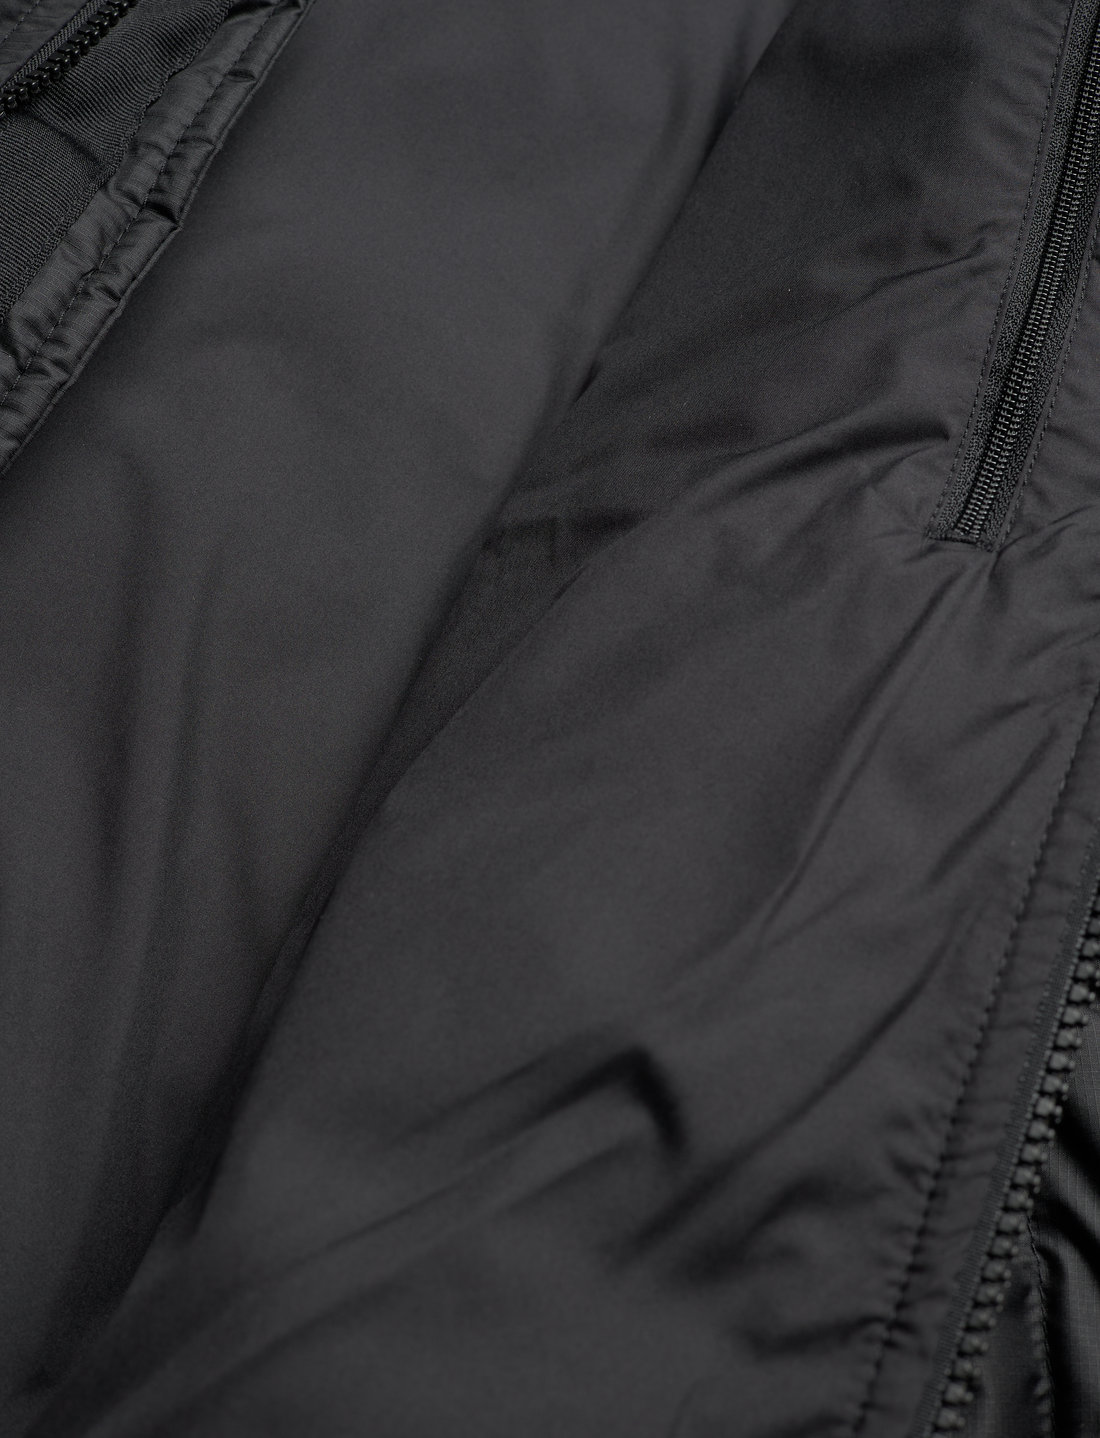 The North Face W Saikuru Jacket - Down- & padded jackets